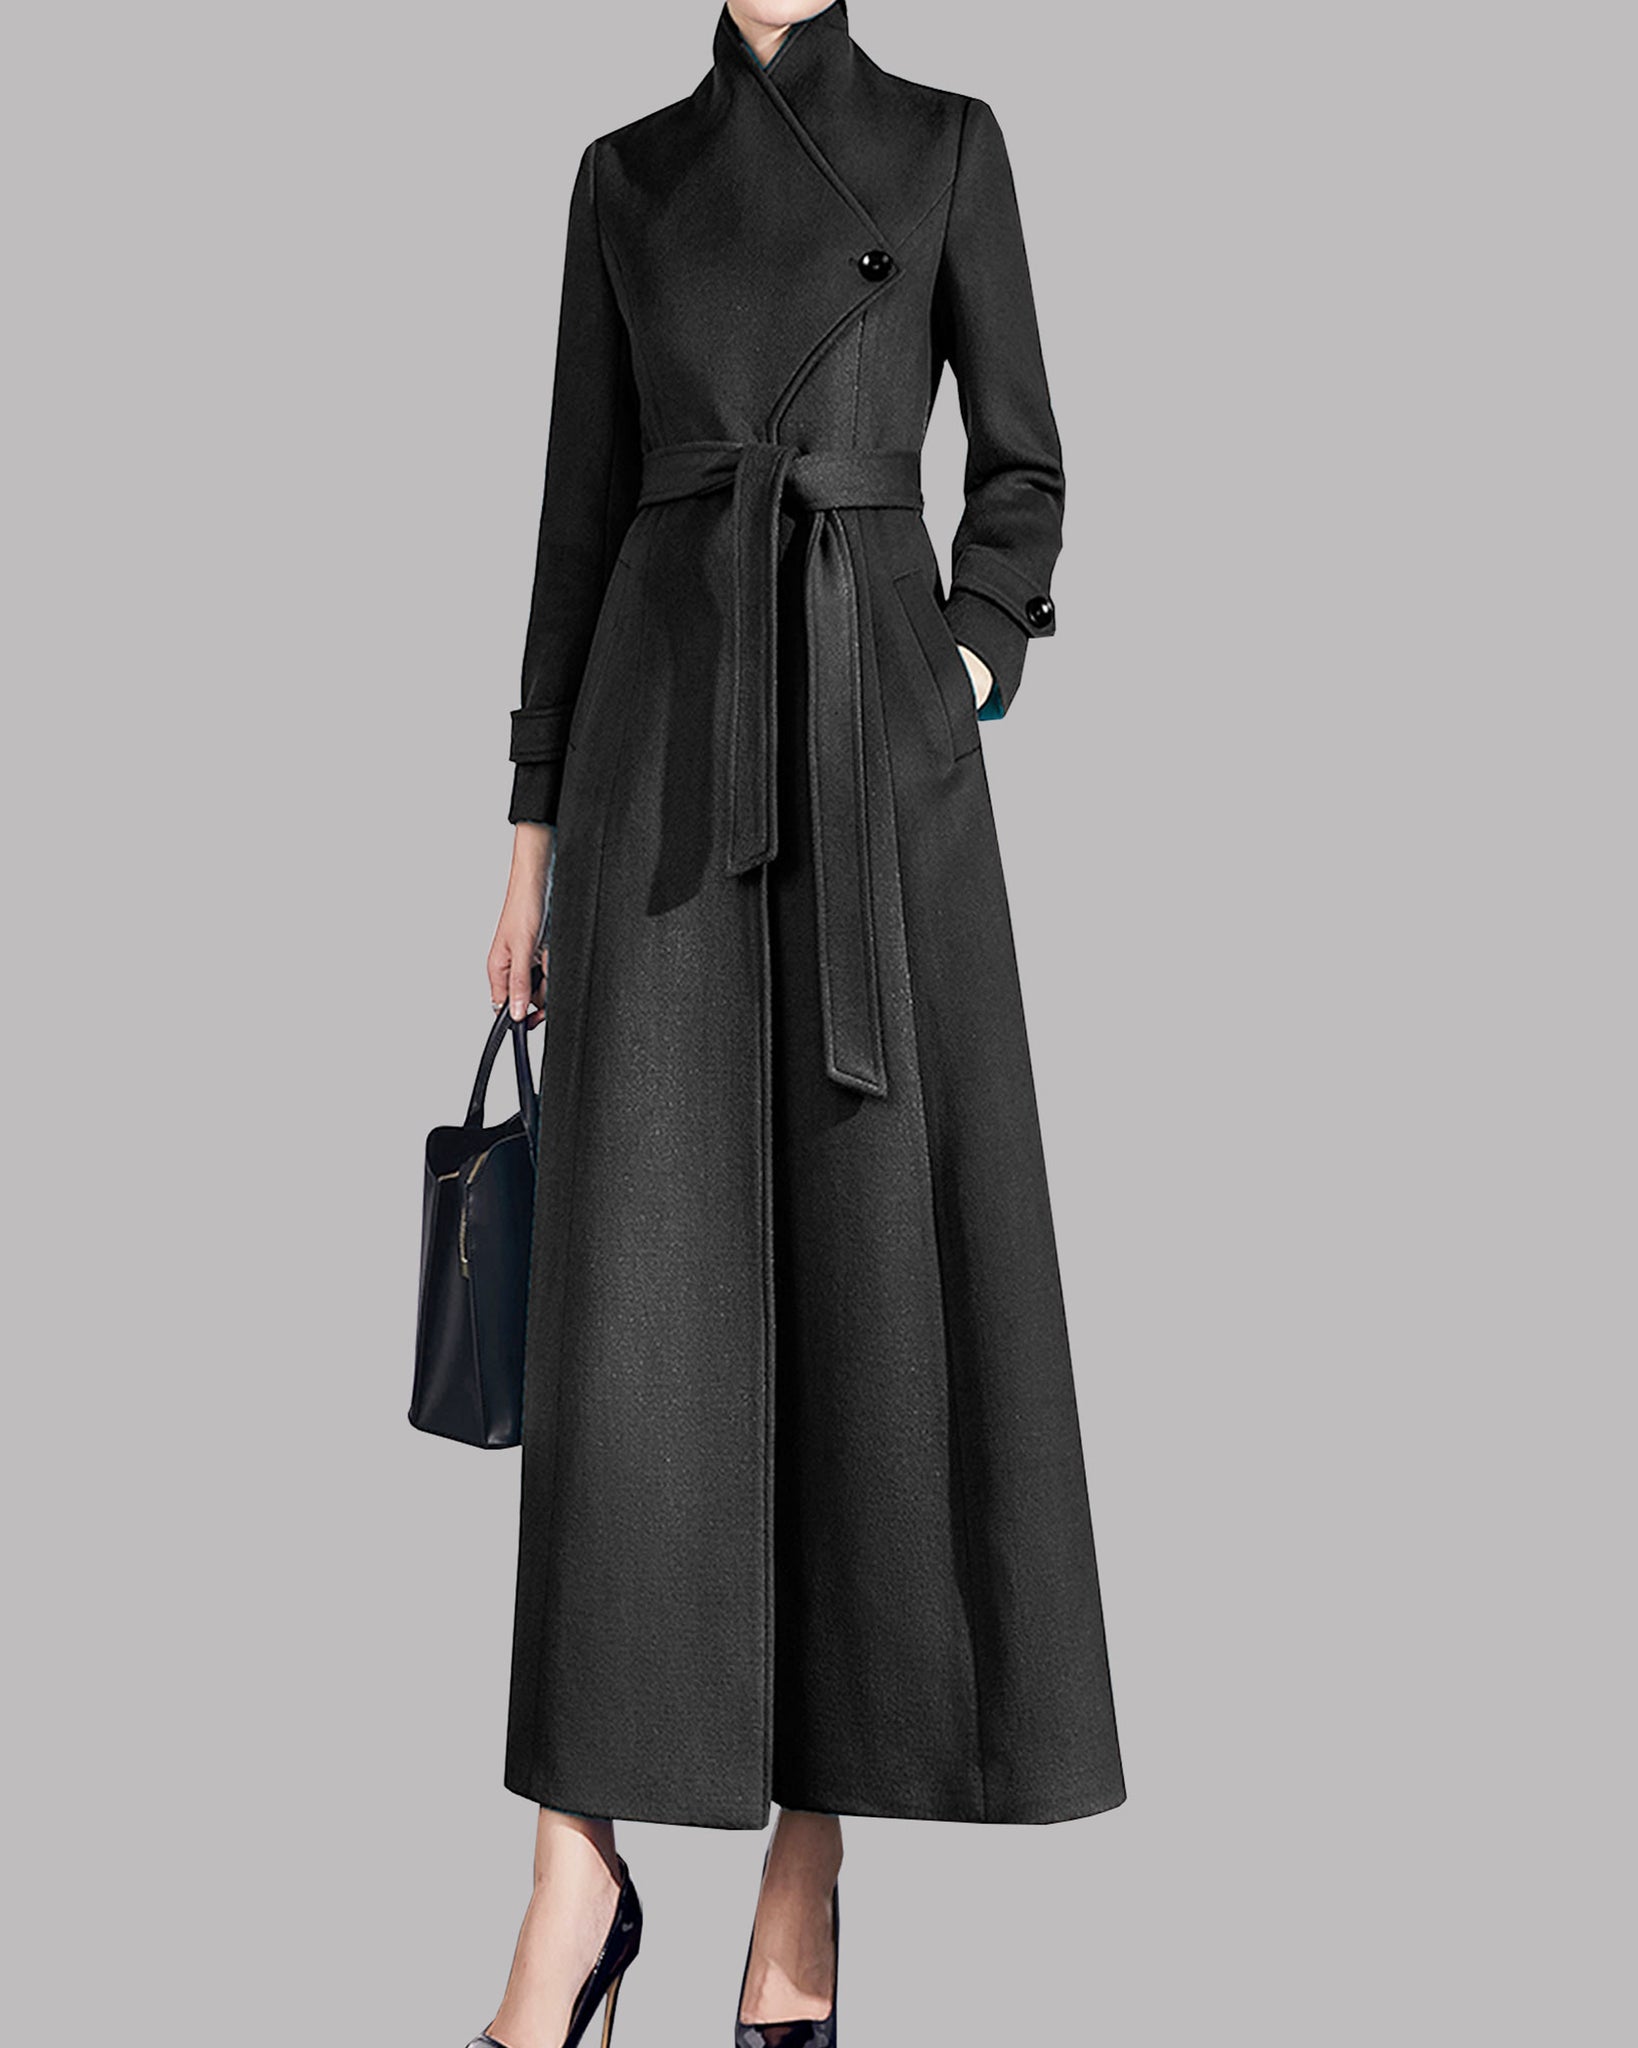 Double Breasted Wool Coat for Winter, Women's Gray Wool Coat, Long